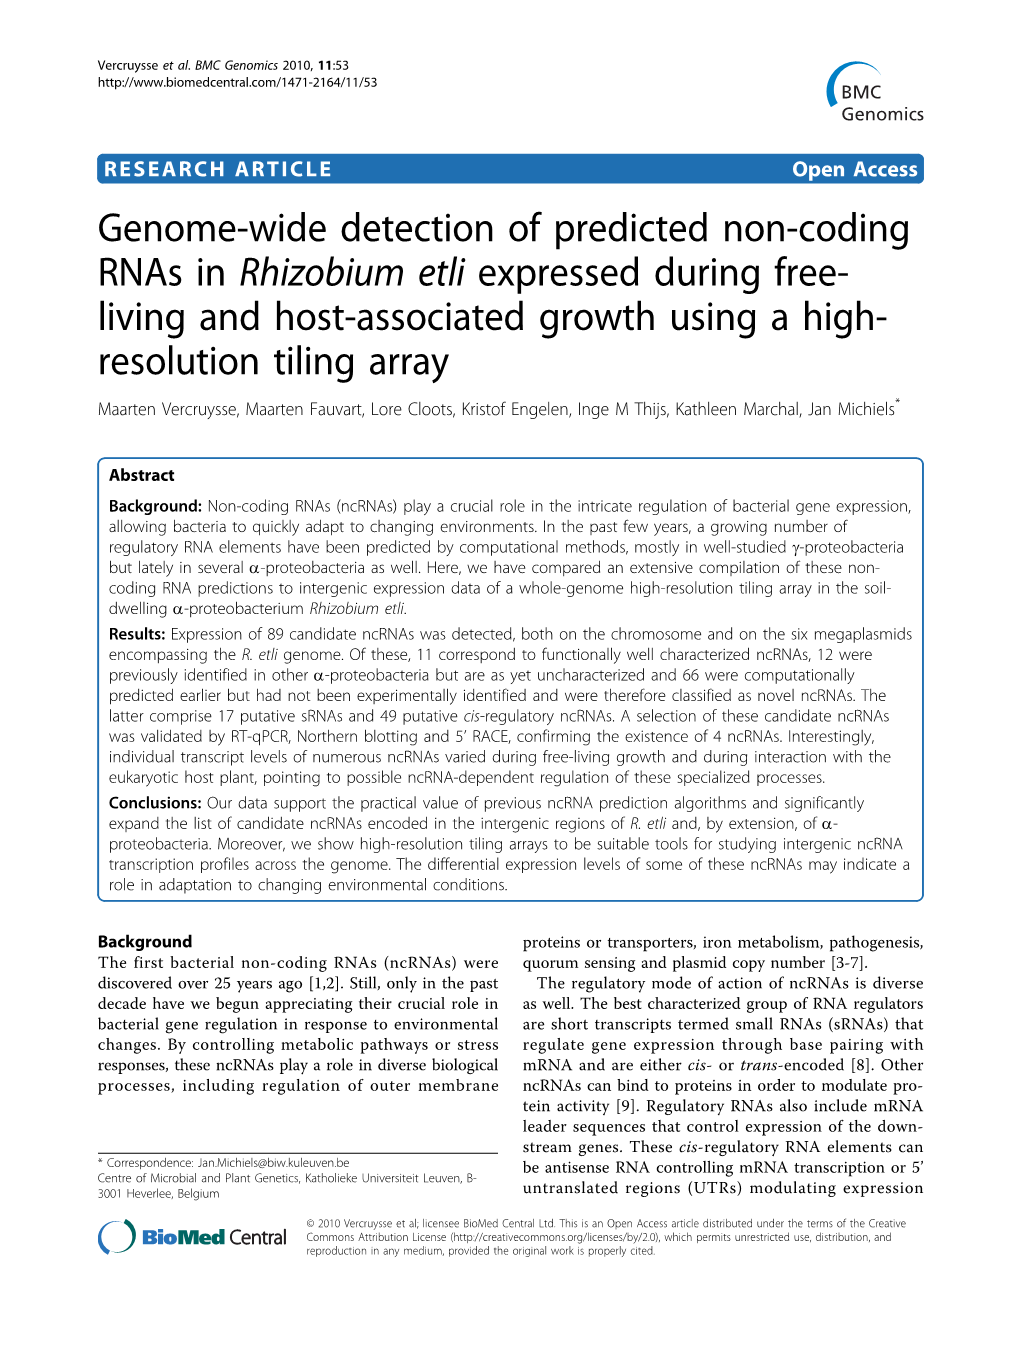 Genome-Wide Detection of Predicted Non-Coding Rnas in Rhizobium Etli